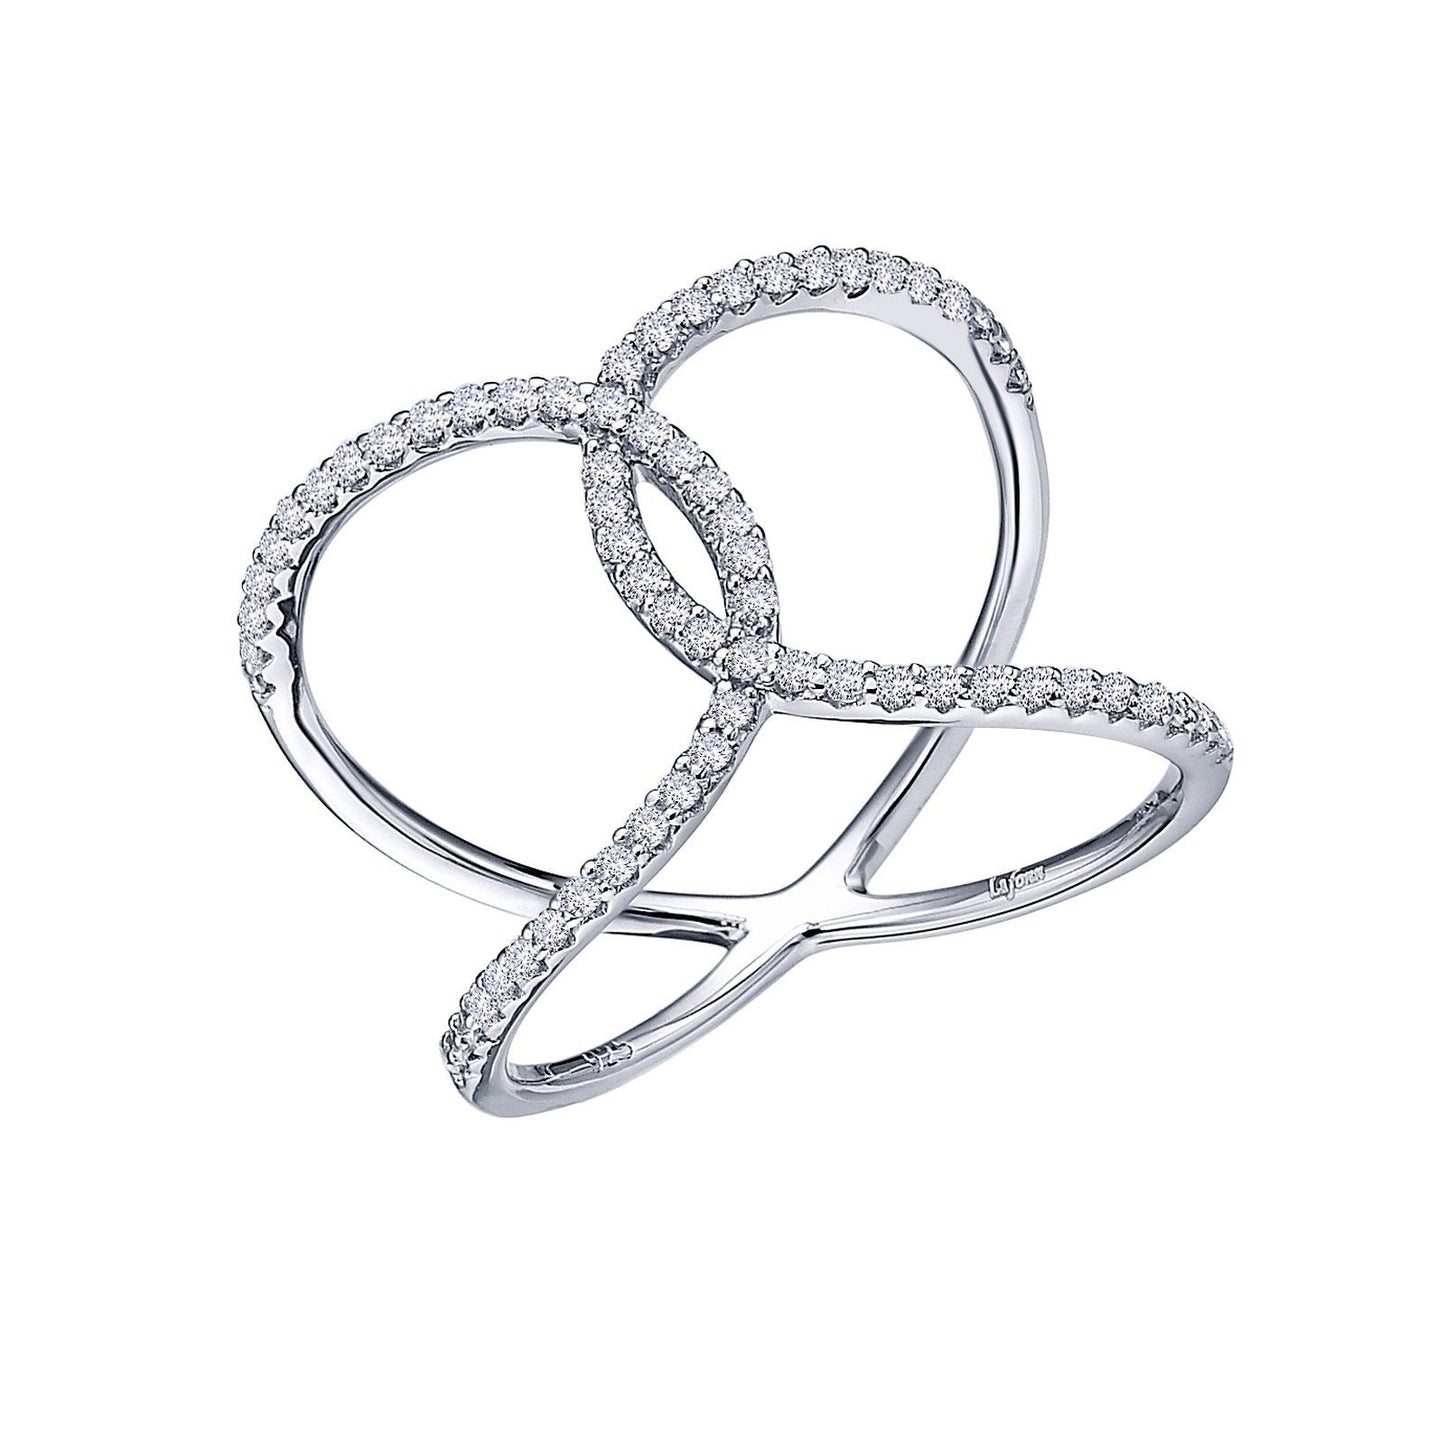 Lafonn Open Crisscross Ring Simulated Diamond RINGS Size 7 Platinum 0.66 CTS 